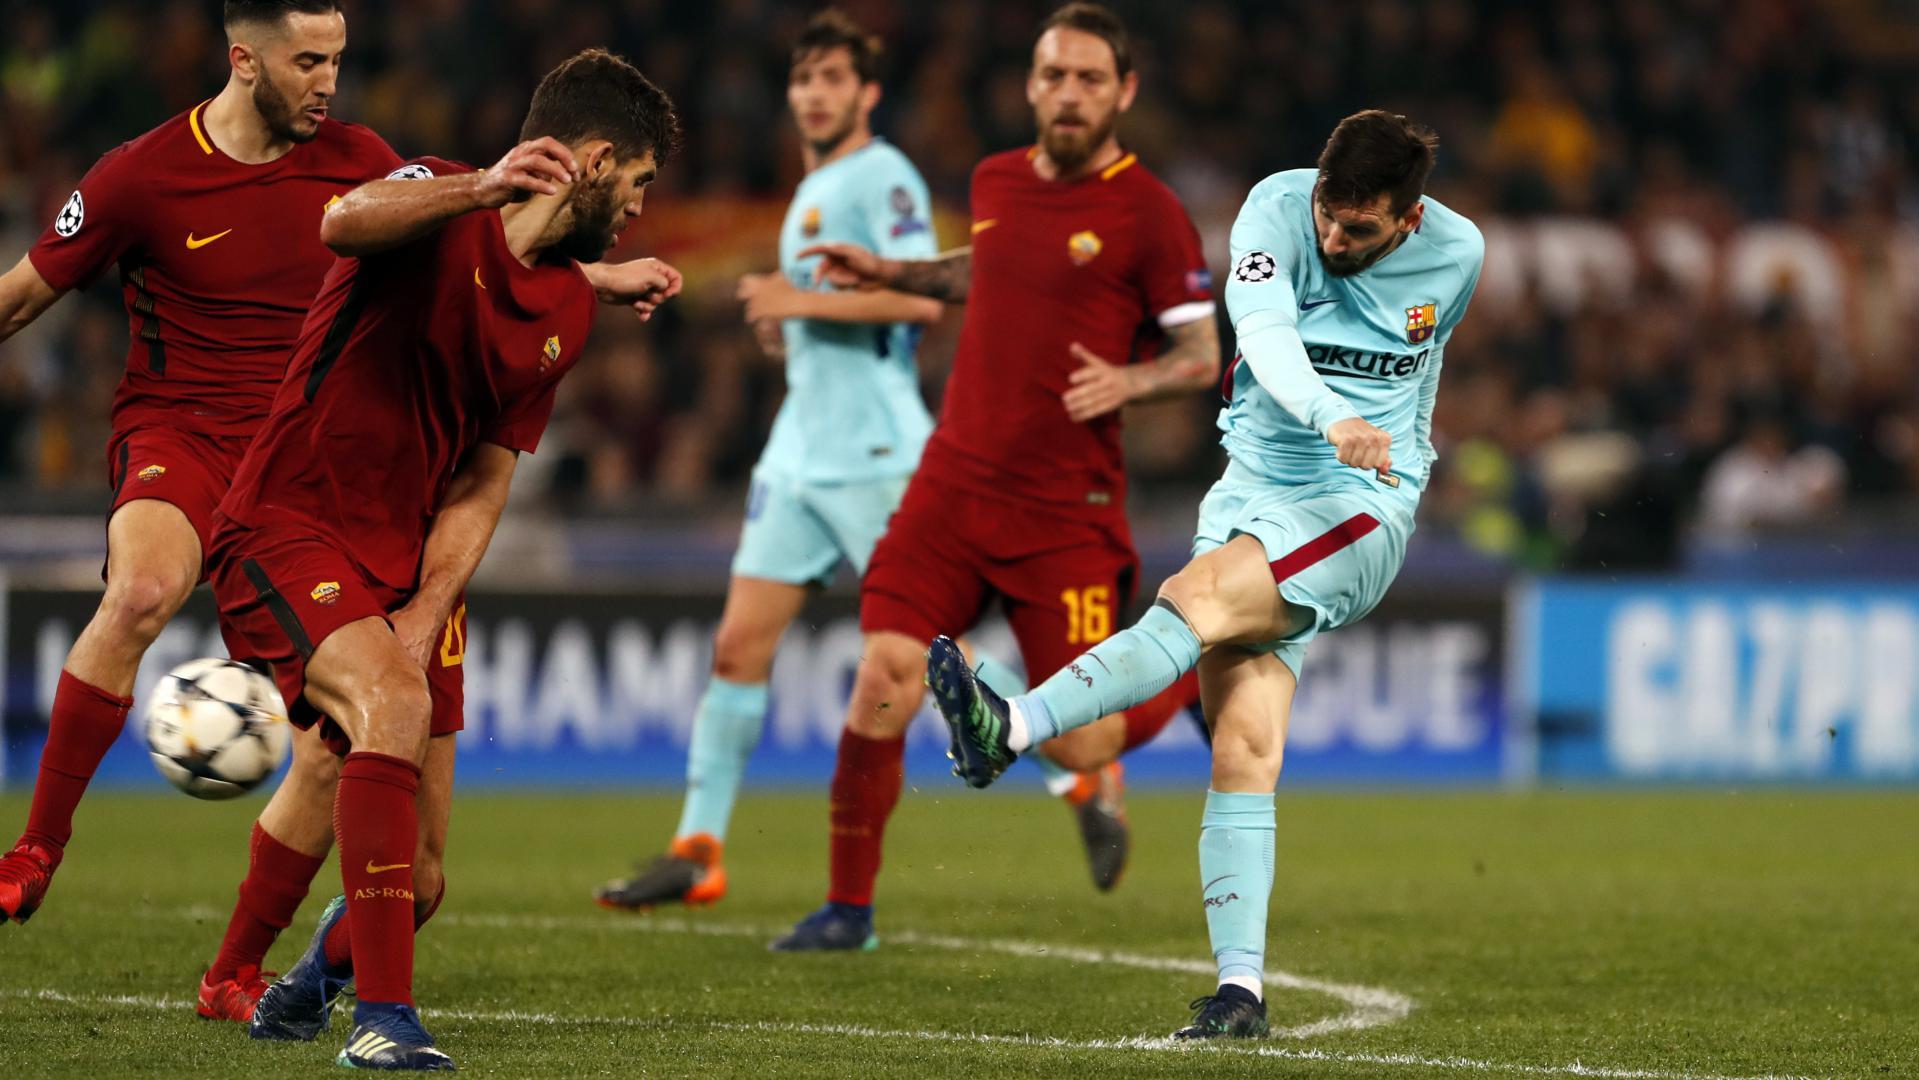 HIGHLIGHTS: Roma vs FC Barcelona